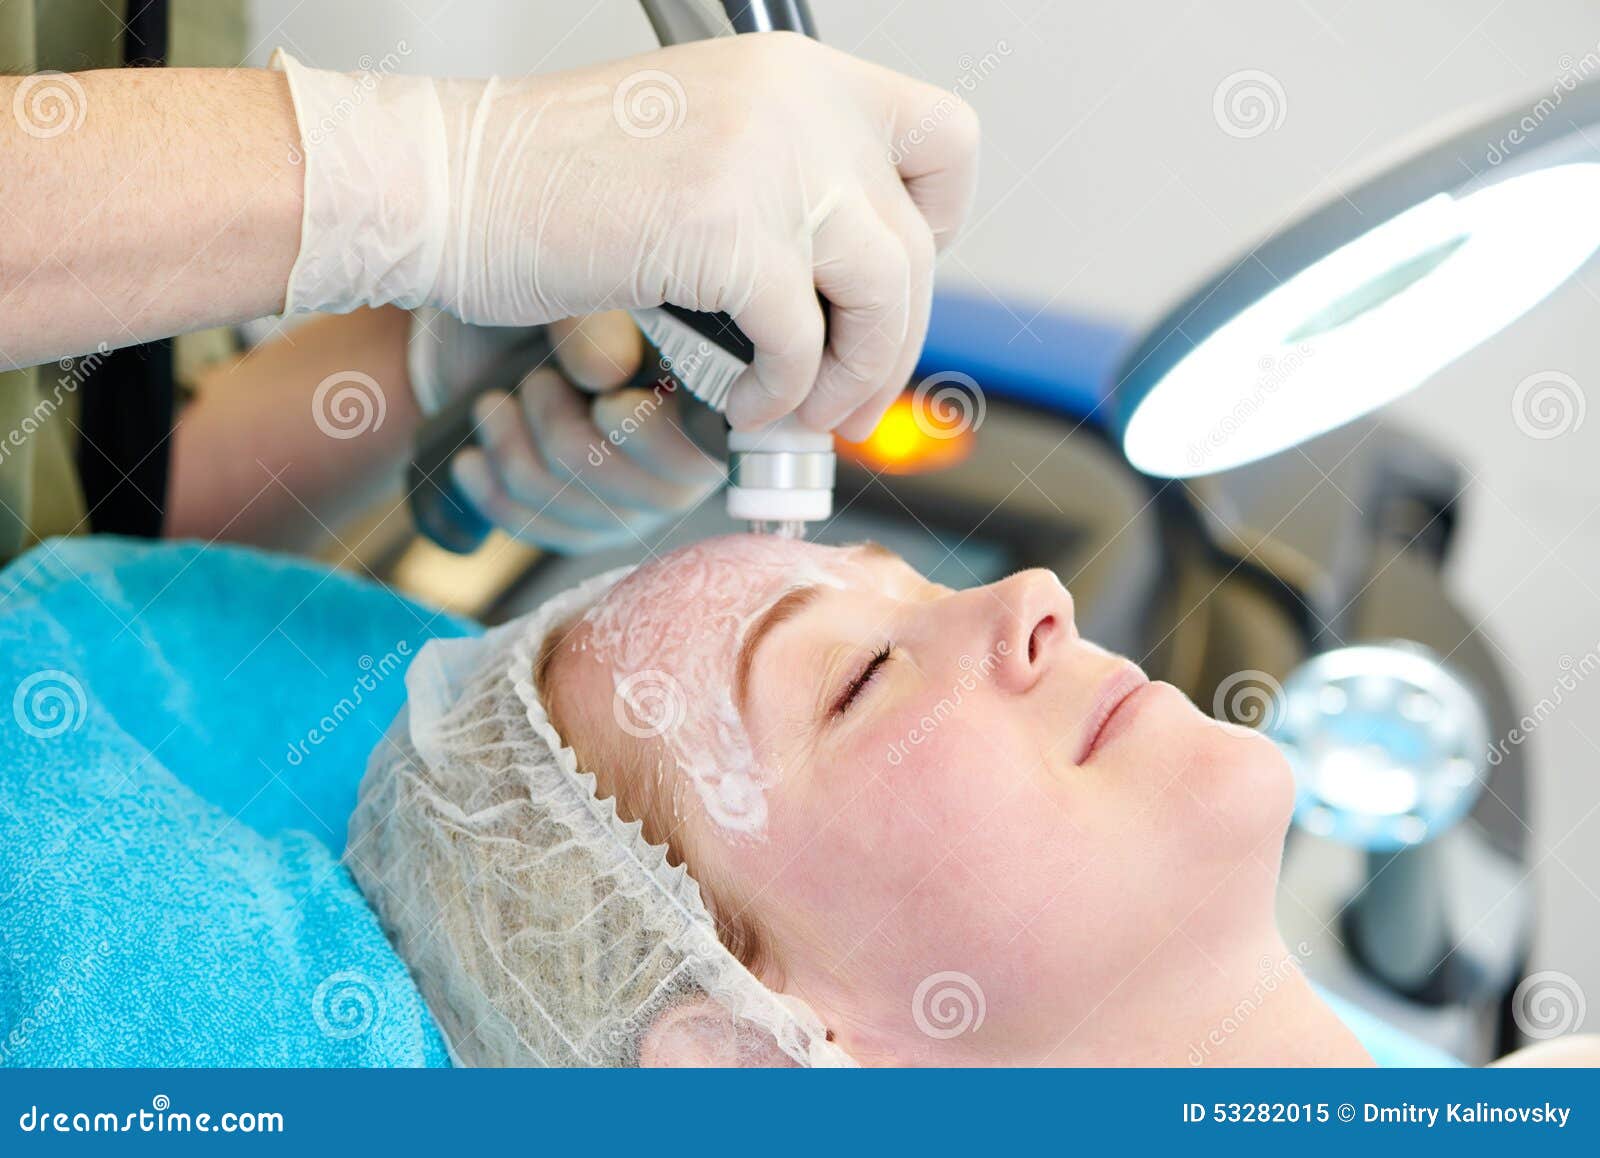 laser cosmetology treatment